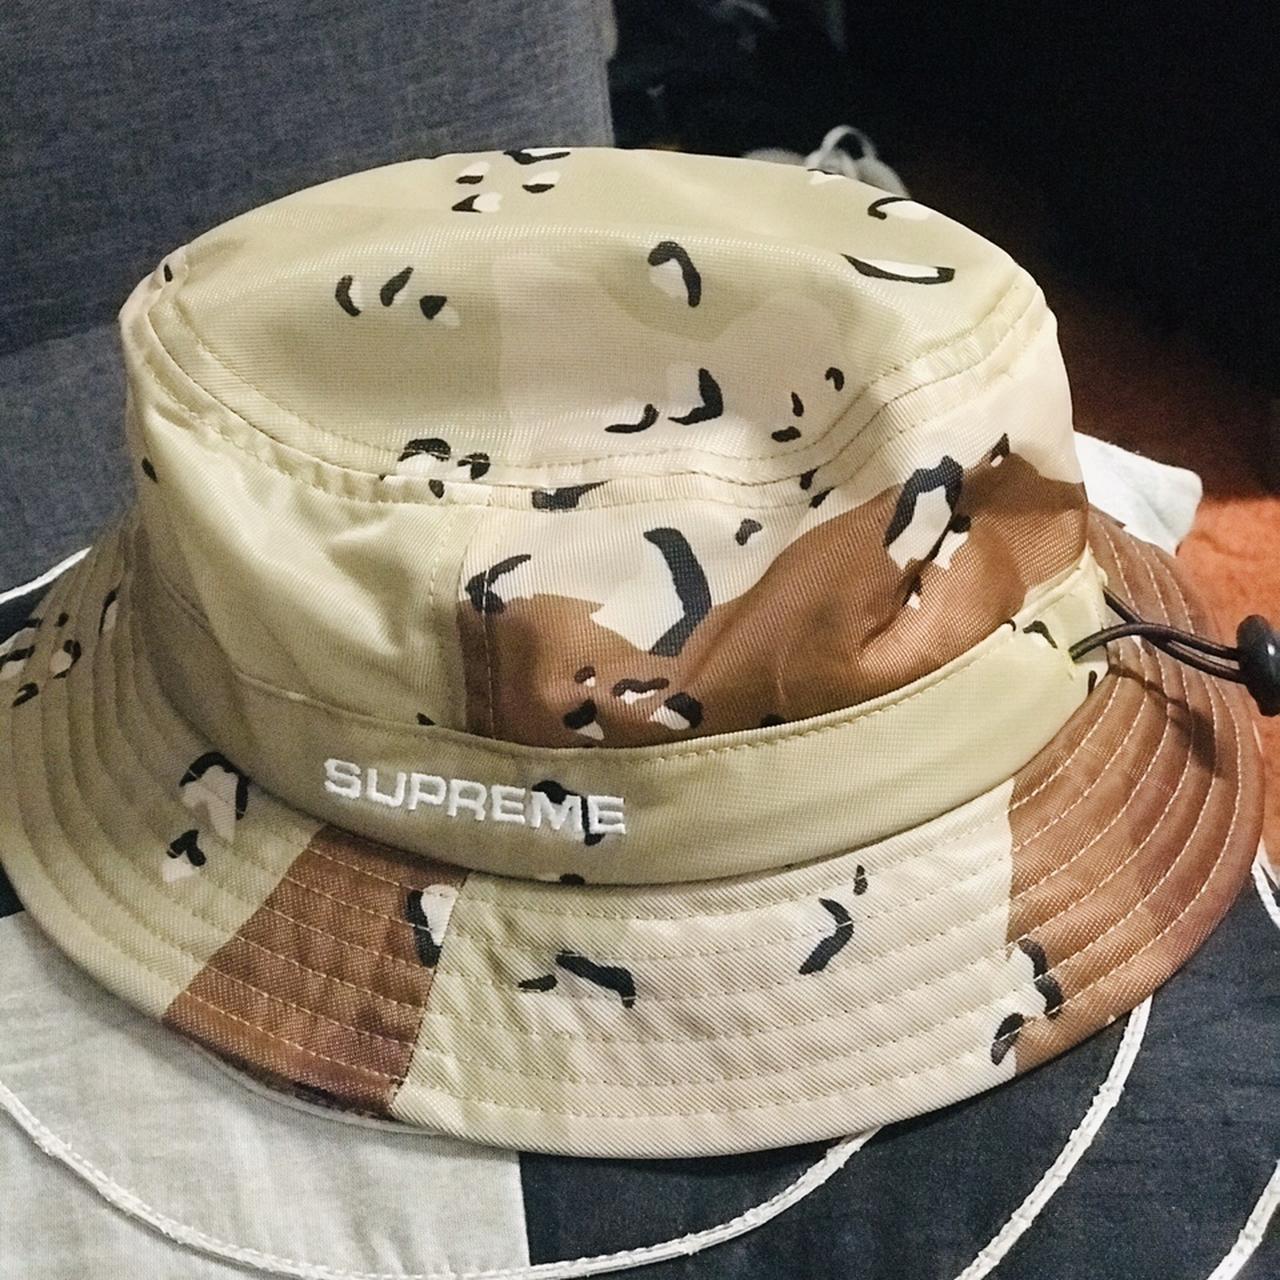 Supreme, Accessories, Supreme X Levis Camo Bucket Hat